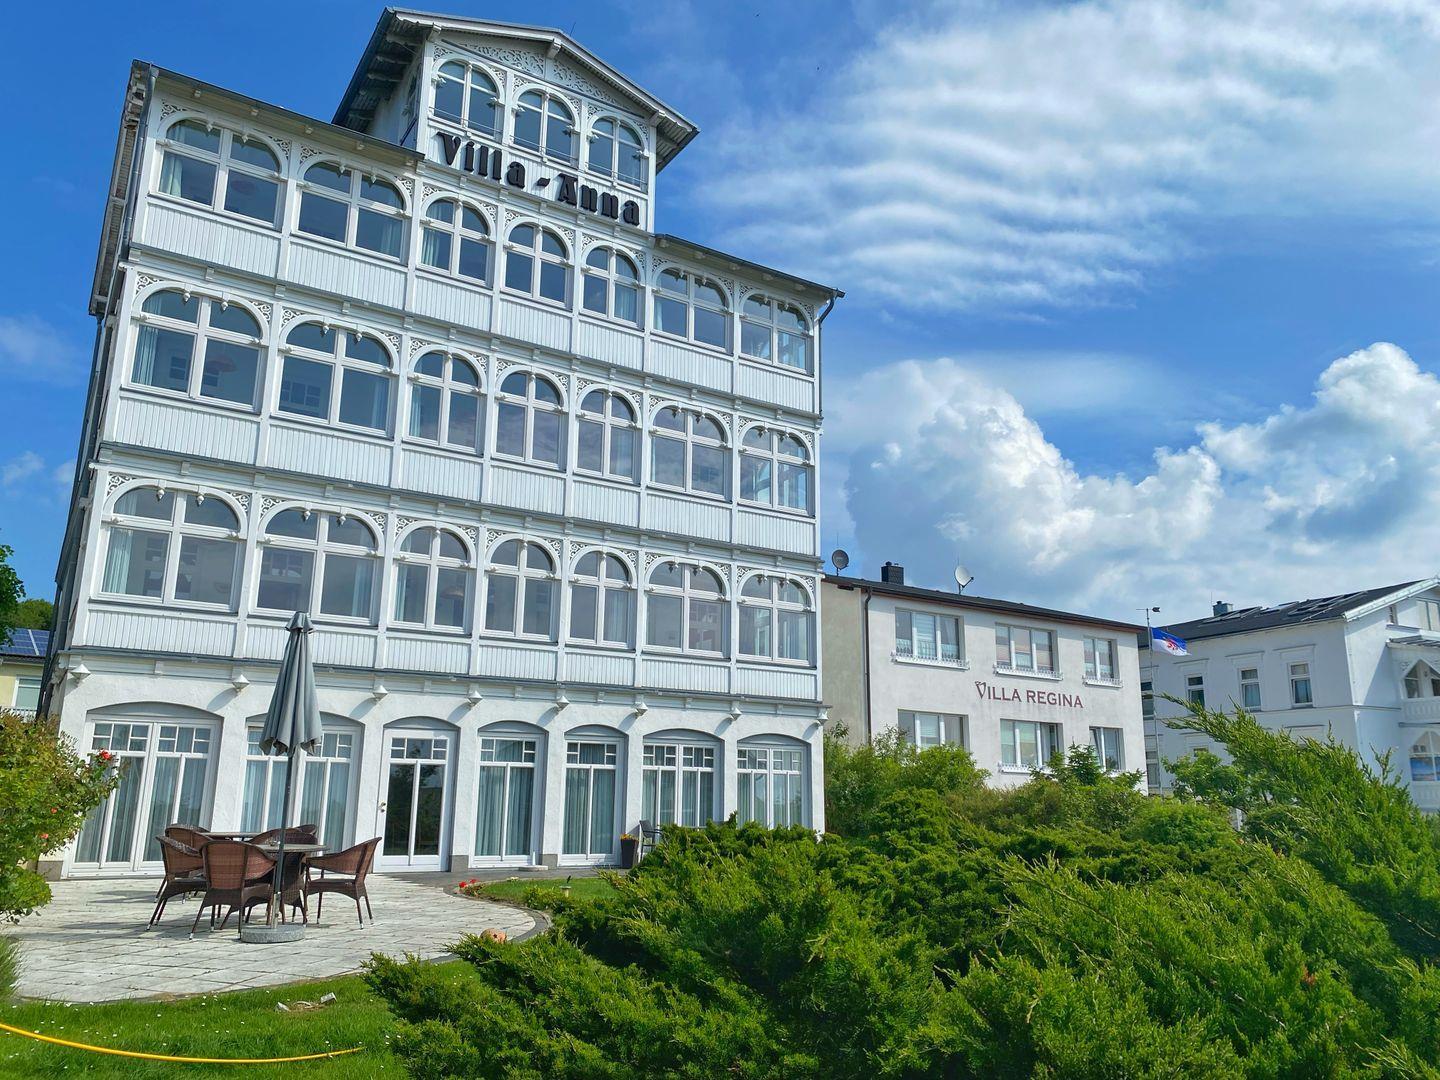 Ferienhaus Sassnitz - Objekt Nr. 512-3022583